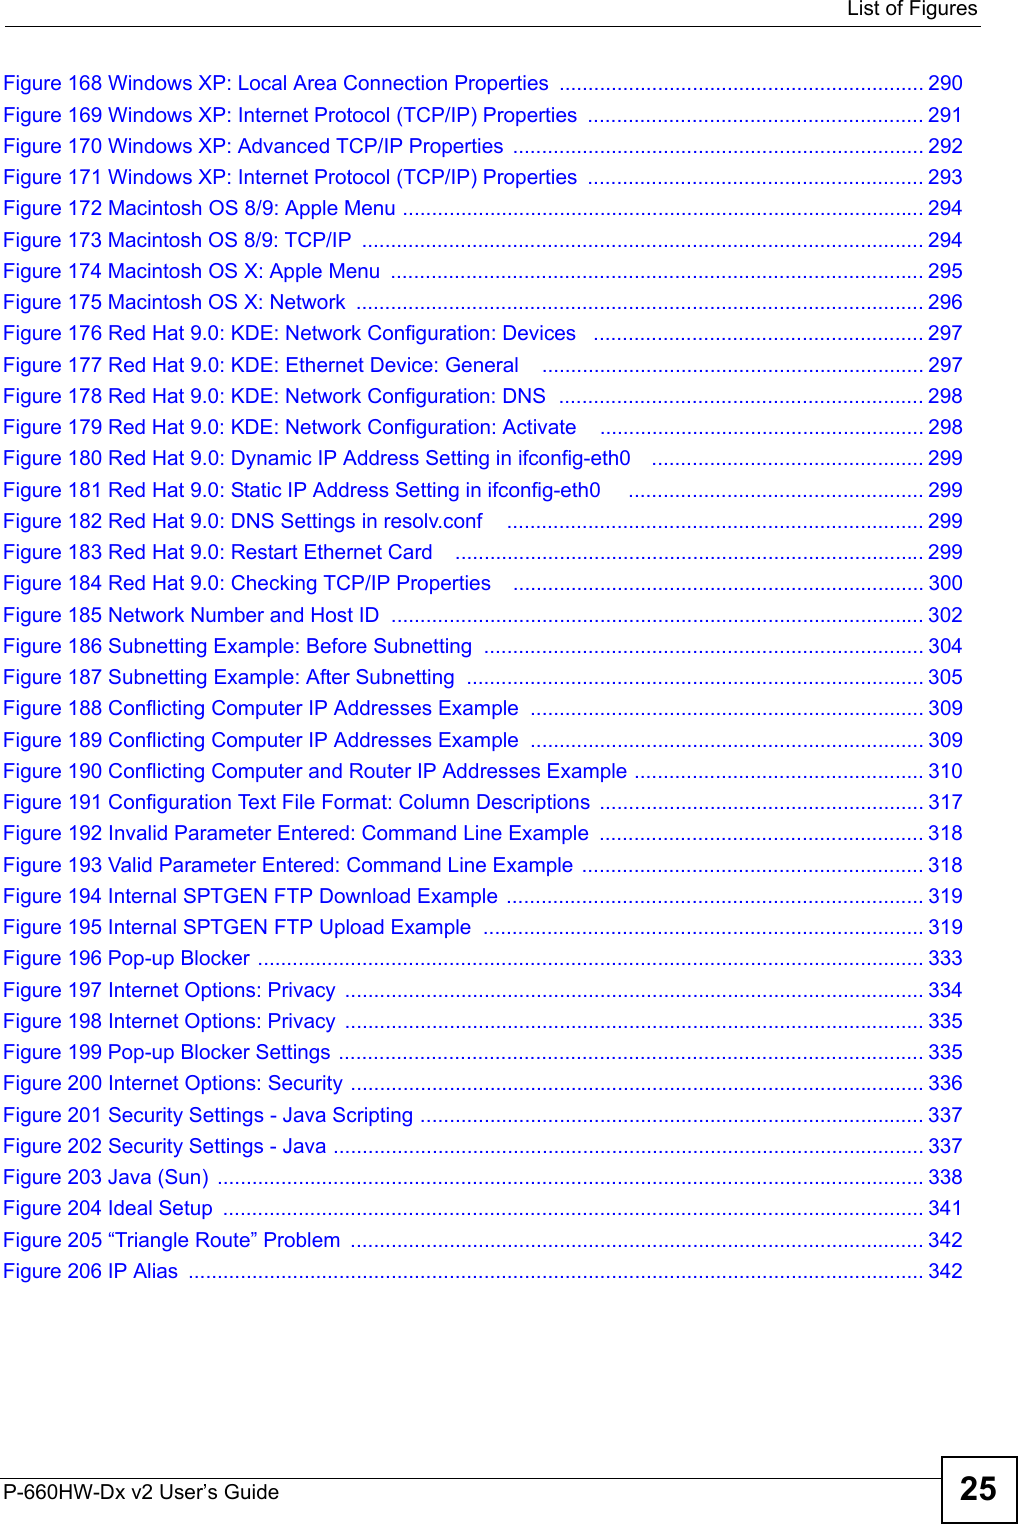  List of FiguresP-660HW-Dx v2 User’s Guide 25Figure 168 Windows XP: Local Area Connection Properties ............................................................... 290Figure 169 Windows XP: Internet Protocol (TCP/IP) Properties  .......................................................... 291Figure 170 Windows XP: Advanced TCP/IP Properties  ....................................................................... 292Figure 171 Windows XP: Internet Protocol (TCP/IP) Properties  .......................................................... 293Figure 172 Macintosh OS 8/9: Apple Menu .......................................................................................... 294Figure 173 Macintosh OS 8/9: TCP/IP  ................................................................................................. 294Figure 174 Macintosh OS X: Apple Menu  ............................................................................................ 295Figure 175 Macintosh OS X: Network  .................................................................................................. 296Figure 176 Red Hat 9.0: KDE: Network Configuration: Devices   ......................................................... 297Figure 177 Red Hat 9.0: KDE: Ethernet Device: General    .................................................................. 297Figure 178 Red Hat 9.0: KDE: Network Configuration: DNS  ............................................................... 298Figure 179 Red Hat 9.0: KDE: Network Configuration: Activate    ........................................................ 298Figure 180 Red Hat 9.0: Dynamic IP Address Setting in ifconfig-eth0    ............................................... 299Figure 181 Red Hat 9.0: Static IP Address Setting in ifconfig-eth0     ................................................... 299Figure 182 Red Hat 9.0: DNS Settings in resolv.conf    ........................................................................ 299Figure 183 Red Hat 9.0: Restart Ethernet Card   ................................................................................. 299Figure 184 Red Hat 9.0: Checking TCP/IP Properties    ....................................................................... 300Figure 185 Network Number and Host ID  ............................................................................................ 302Figure 186 Subnetting Example: Before Subnetting  ............................................................................ 304Figure 187 Subnetting Example: After Subnetting  ............................................................................... 305Figure 188 Conflicting Computer IP Addresses Example .................................................................... 309Figure 189 Conflicting Computer IP Addresses Example .................................................................... 309Figure 190 Conflicting Computer and Router IP Addresses Example .................................................. 310Figure 191 Configuration Text File Format: Column Descriptions  ........................................................ 317Figure 192 Invalid Parameter Entered: Command Line Example  ........................................................ 318Figure 193 Valid Parameter Entered: Command Line Example  ........................................................... 318Figure 194 Internal SPTGEN FTP Download Example  ........................................................................ 319Figure 195 Internal SPTGEN FTP Upload Example  ............................................................................ 319Figure 196 Pop-up Blocker ................................................................................................................... 333Figure 197 Internet Options: Privacy  .................................................................................................... 334Figure 198 Internet Options: Privacy  .................................................................................................... 335Figure 199 Pop-up Blocker Settings ..................................................................................................... 335Figure 200 Internet Options: Security ................................................................................................... 336Figure 201 Security Settings - Java Scripting ....................................................................................... 337Figure 202 Security Settings - Java ...................................................................................................... 337Figure 203 Java (Sun)  .......................................................................................................................... 338Figure 204 Ideal Setup  ......................................................................................................................... 341Figure 205 “Triangle Route” Problem  ................................................................................................... 342Figure 206 IP Alias  ............................................................................................................................... 342